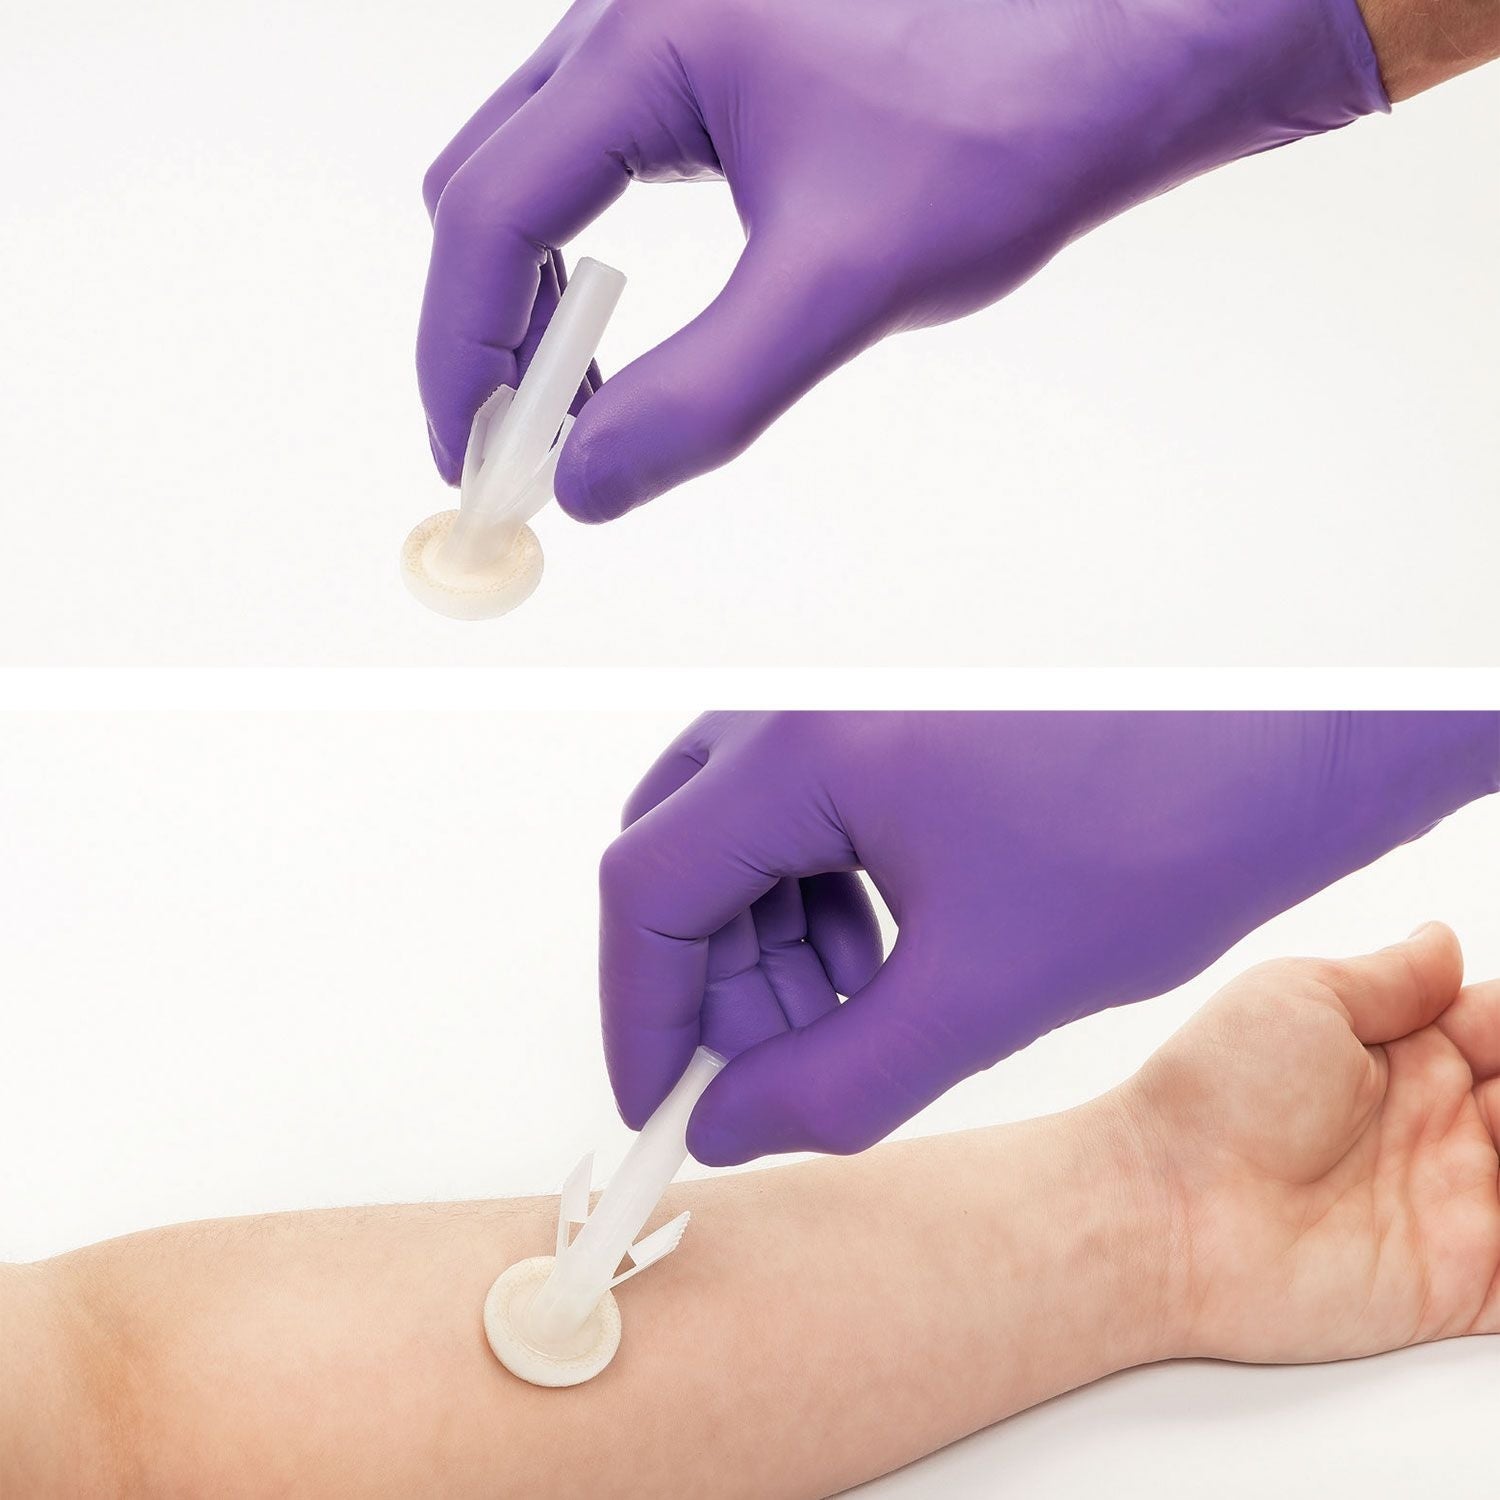 ChloraPrep Patient Preoperative Skin Preparation Applicator | Clear | 3ml | Pack of 25